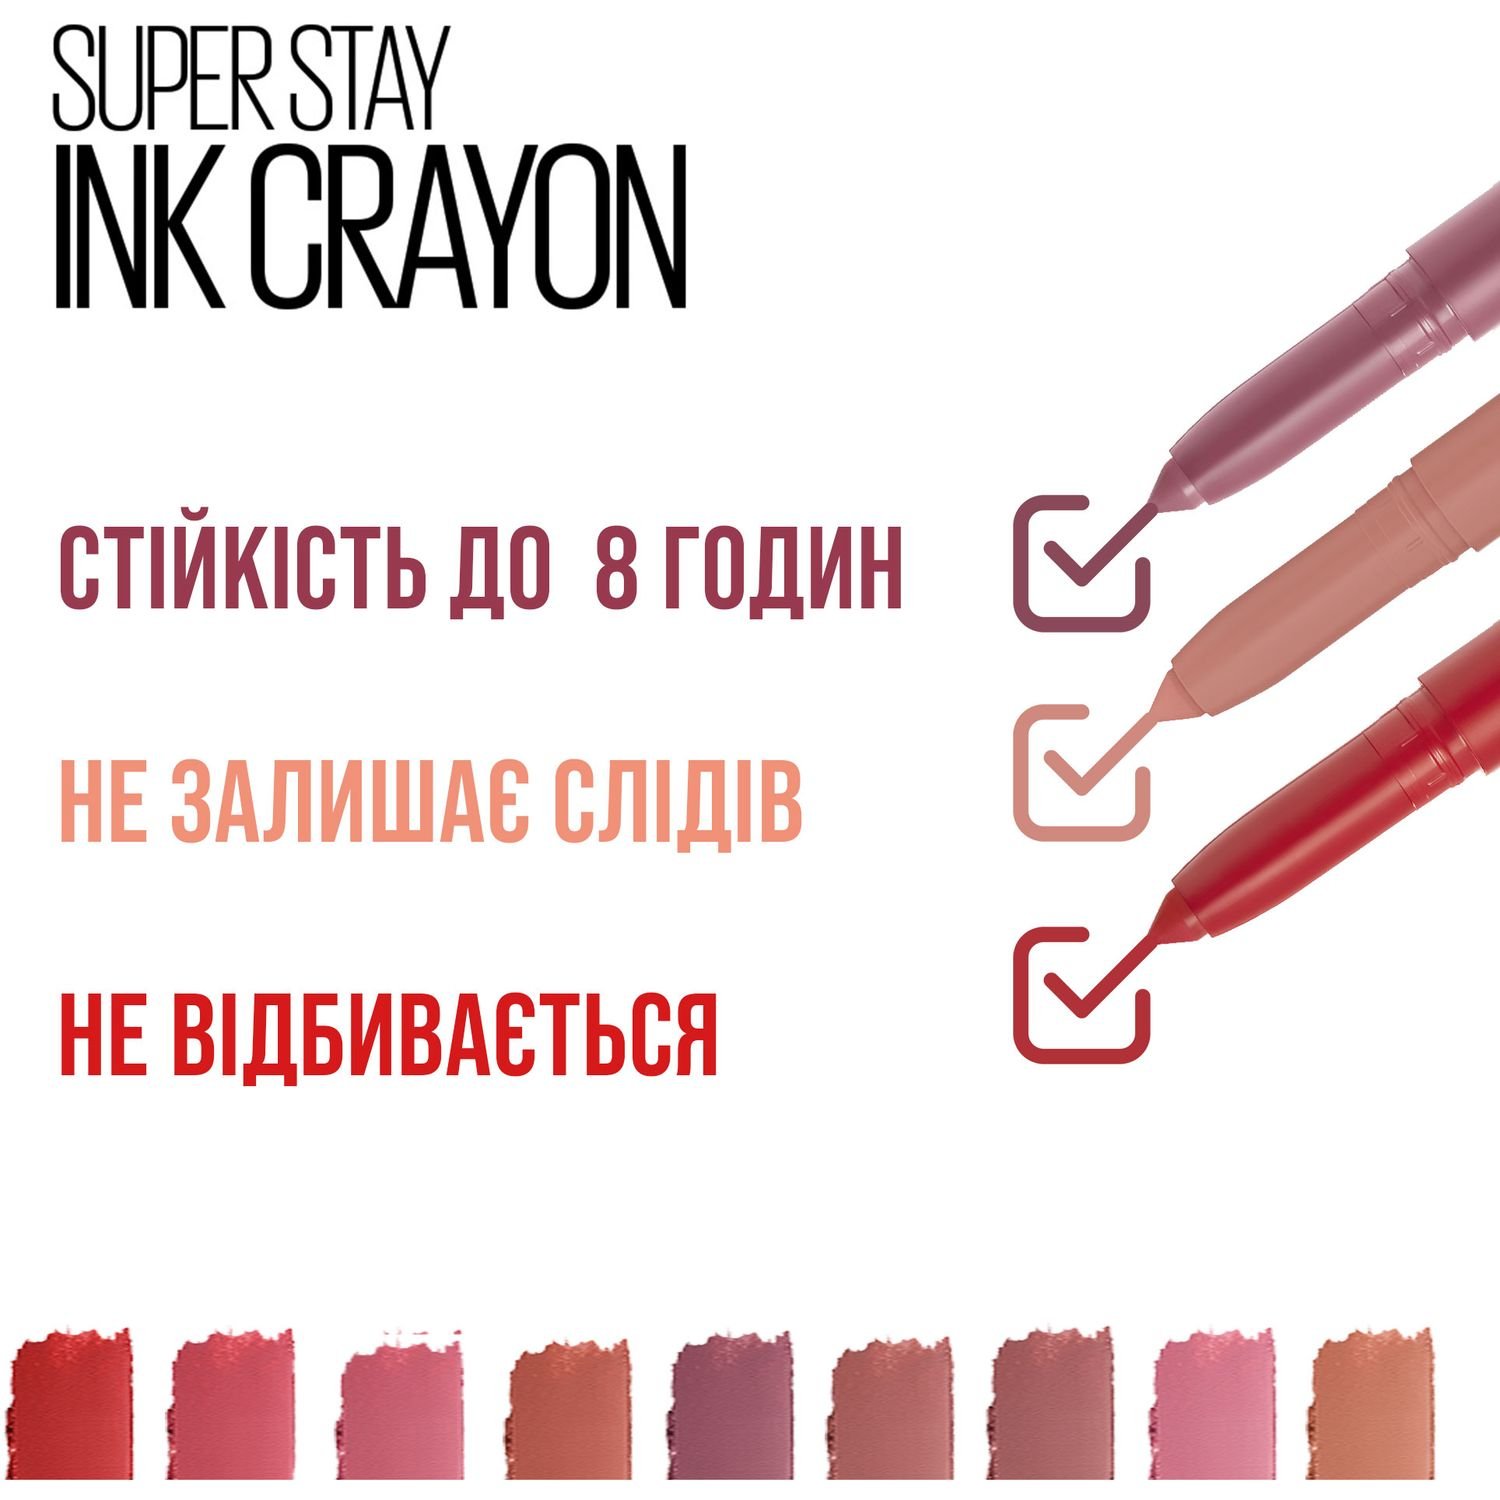 Губная помада-карандаш Maybelline New York Super Stay Ink Crayon, тон 85 (Пурпурно-розовый Матовый), 2 г (B3299400) - фото 5